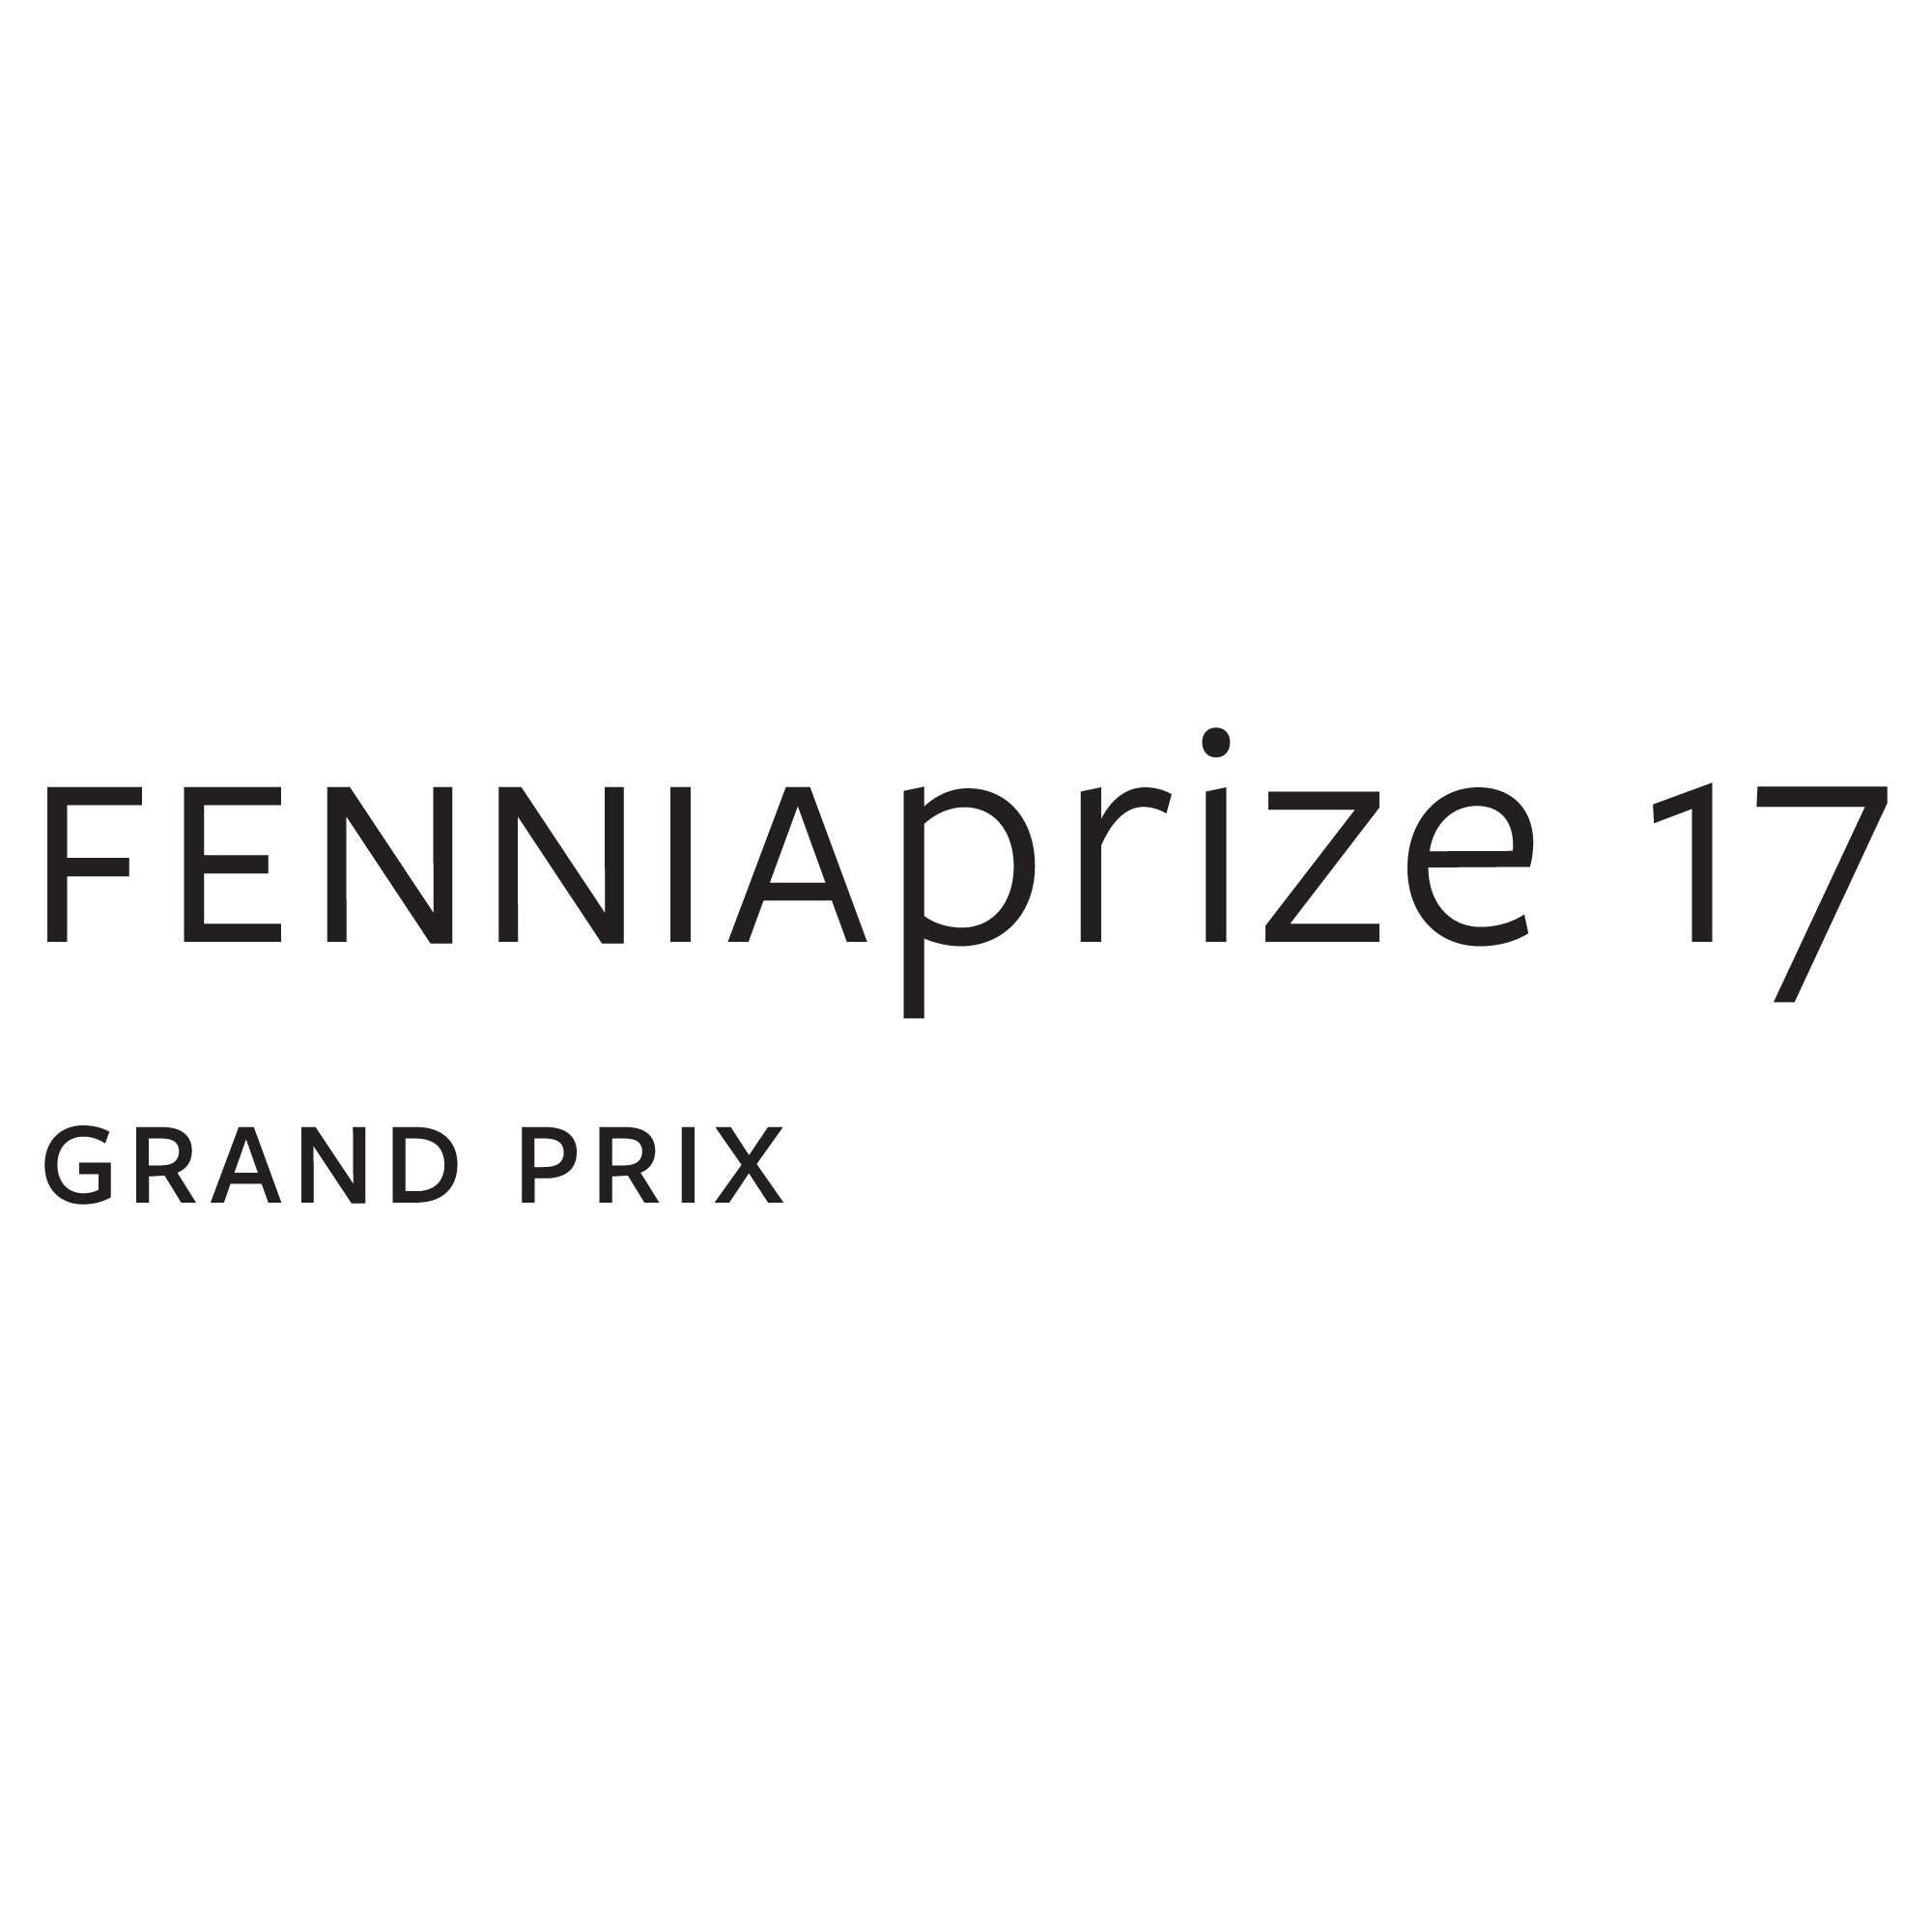 Fennia Prize Grand Prix 2017, logo.